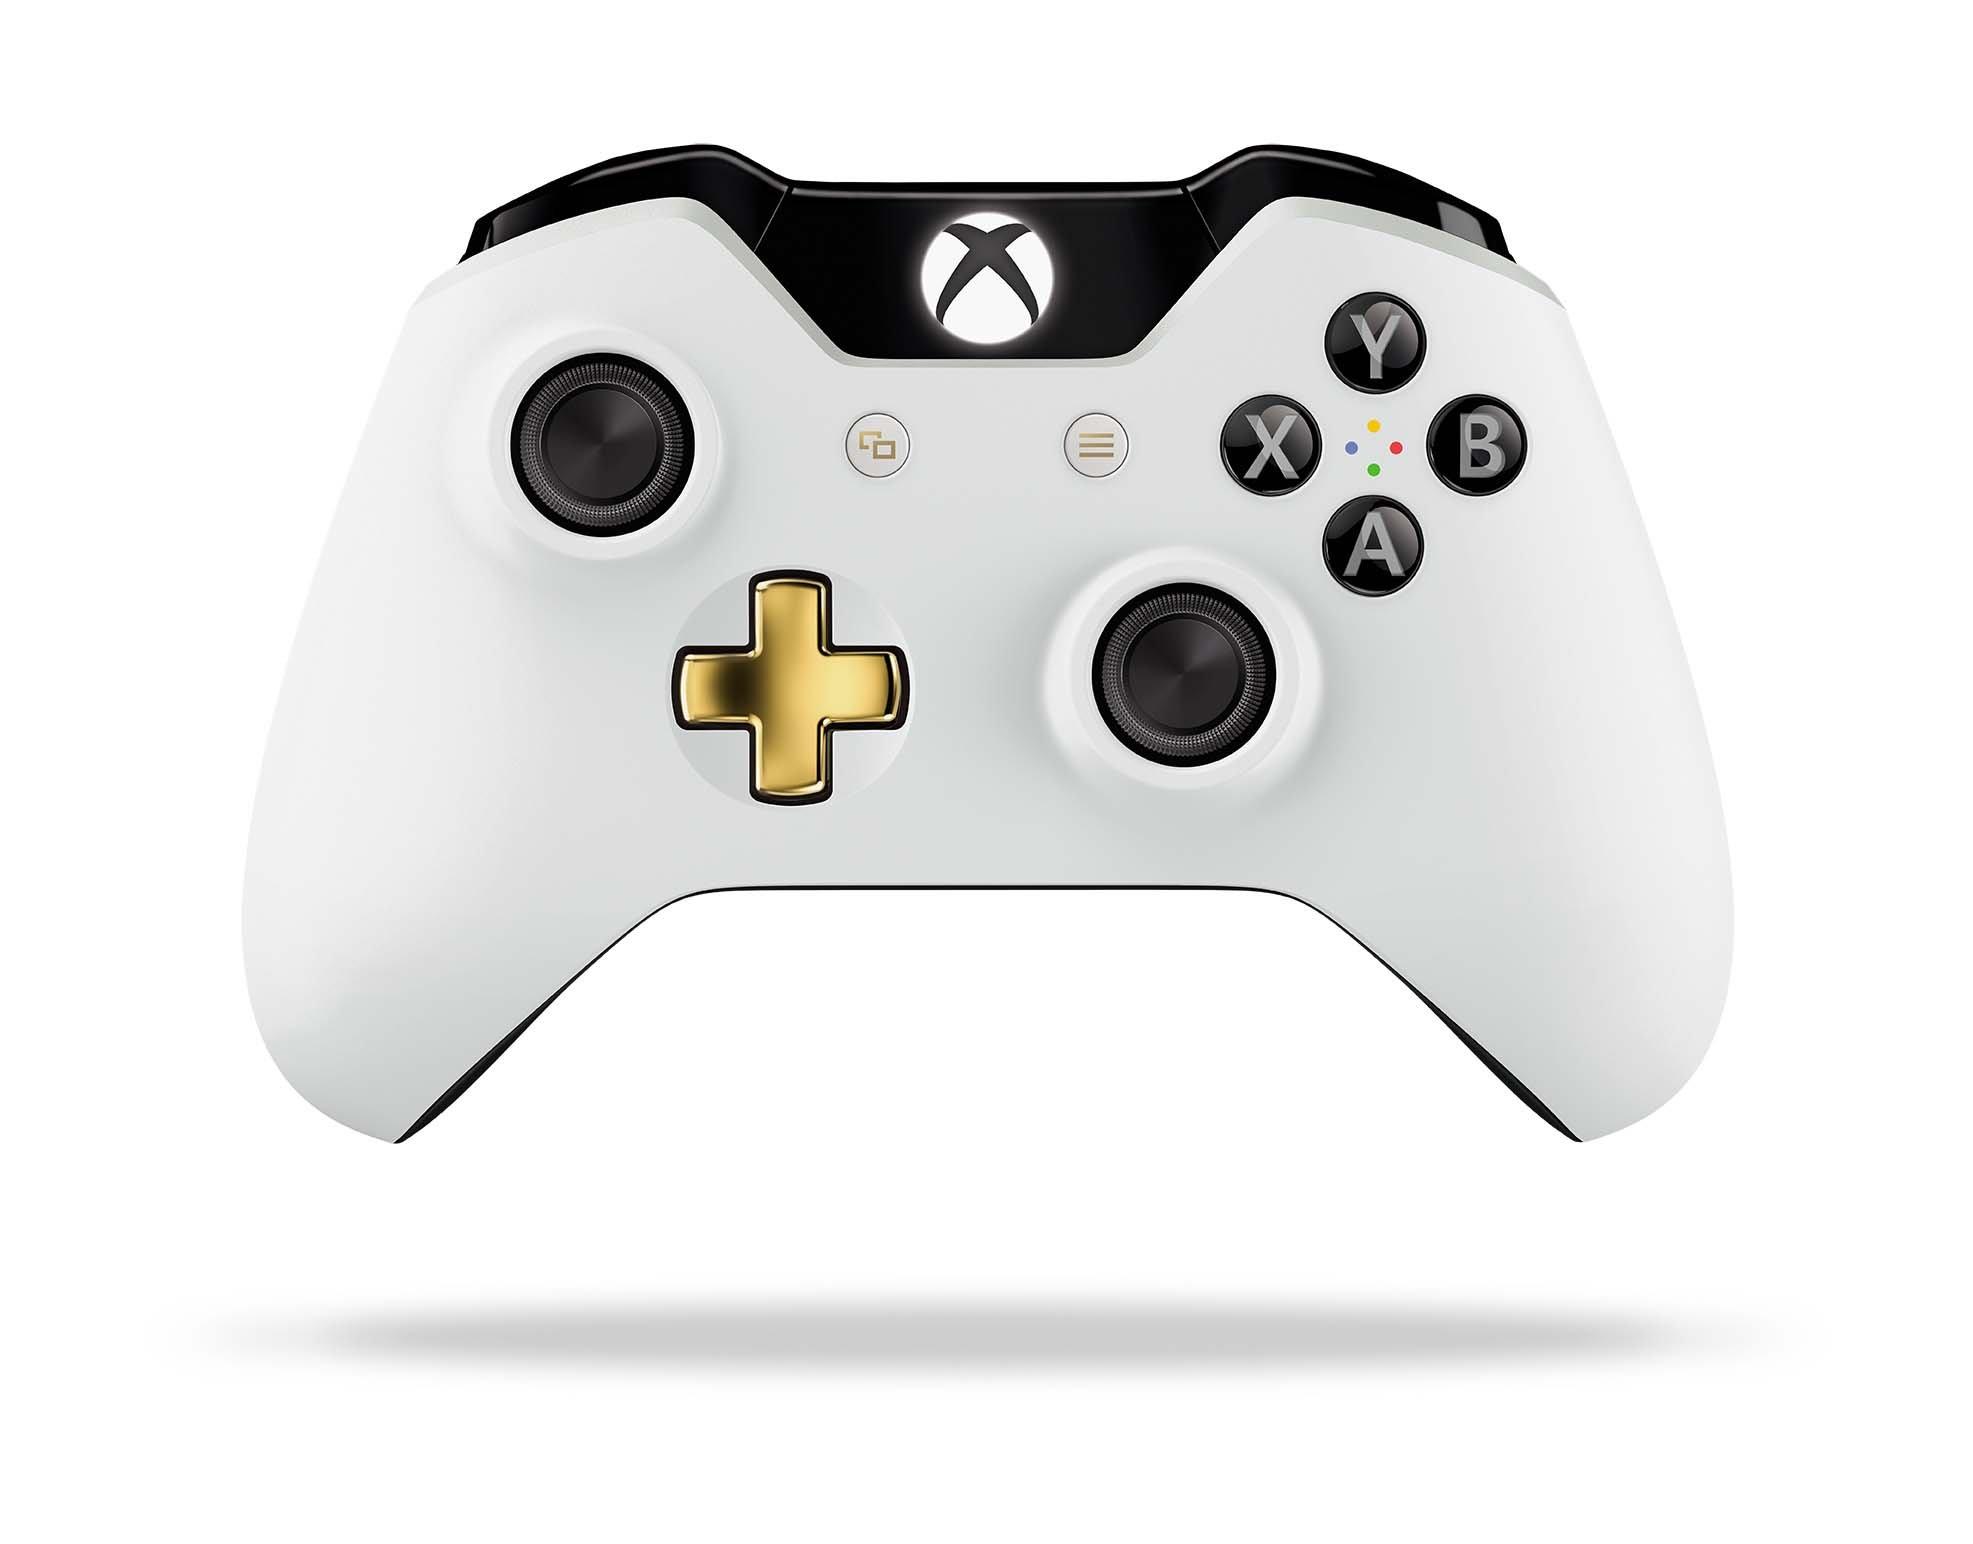 Noord mannetje afstuderen Microsoft Xbox One Wireless Controller Midnight Forces | GameStop